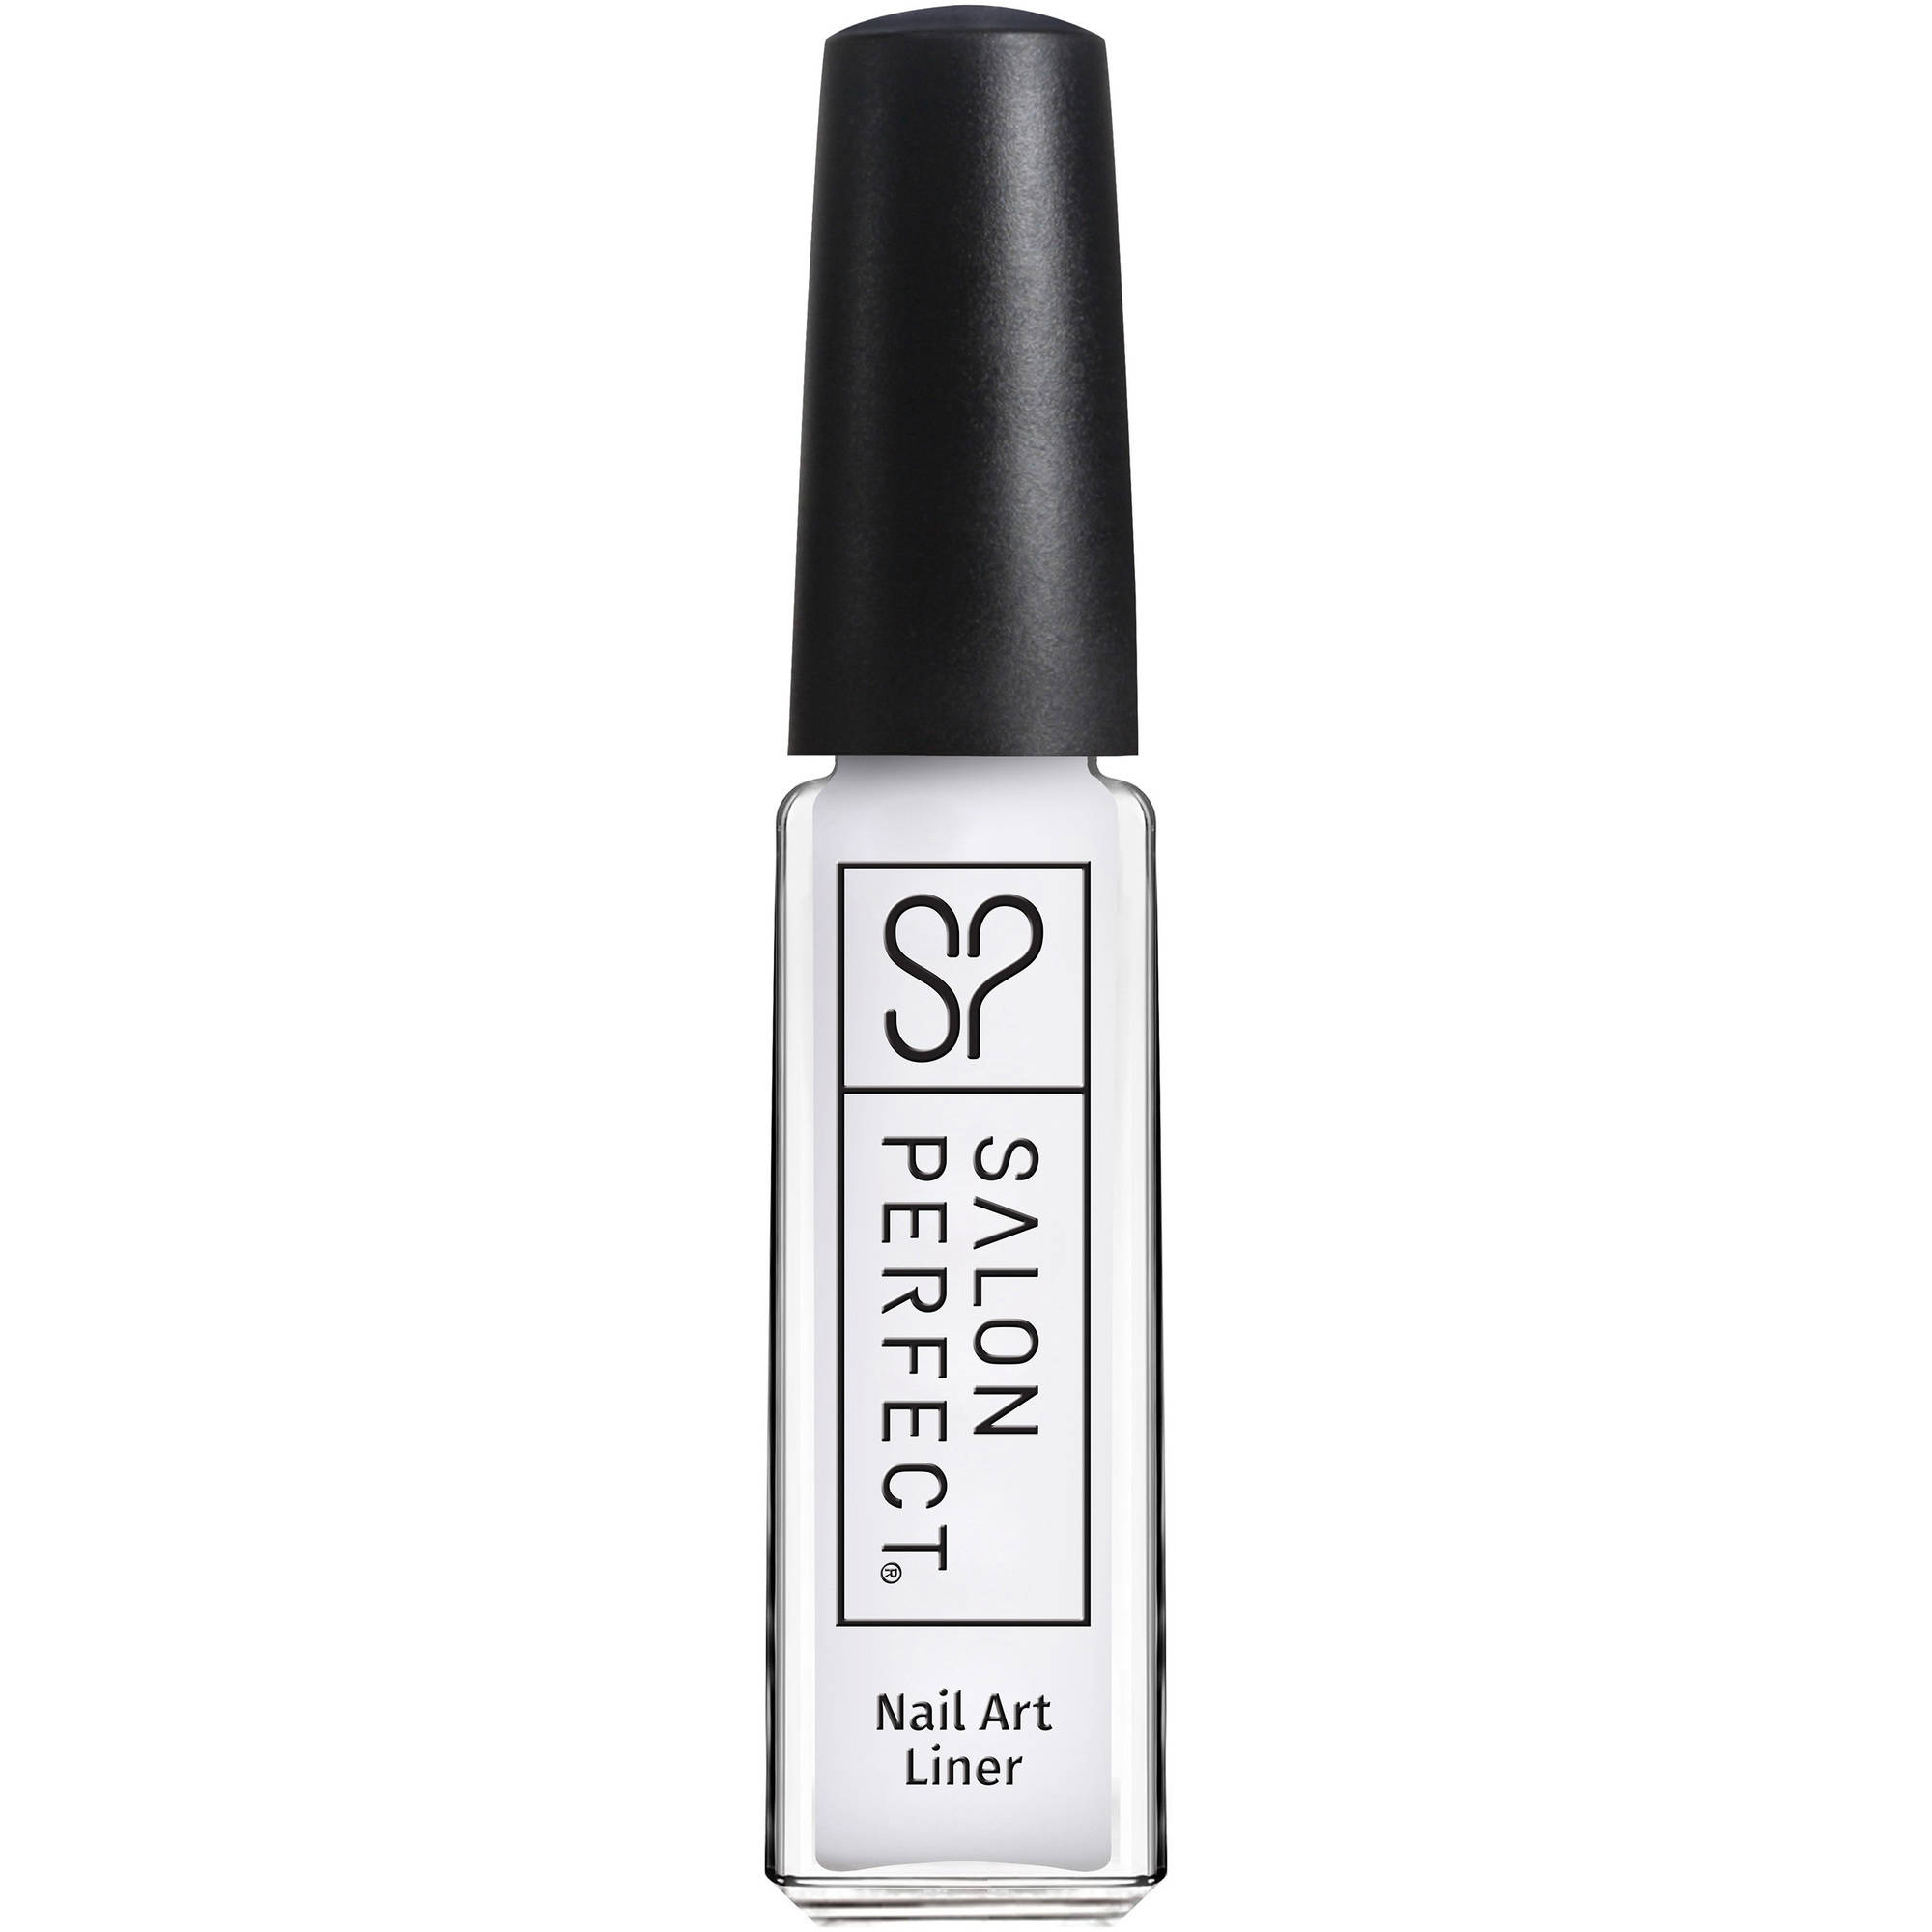 Salon Perfect Nail Art Liner, 802 White Out, 0.25 fl oz - image 1 of 1